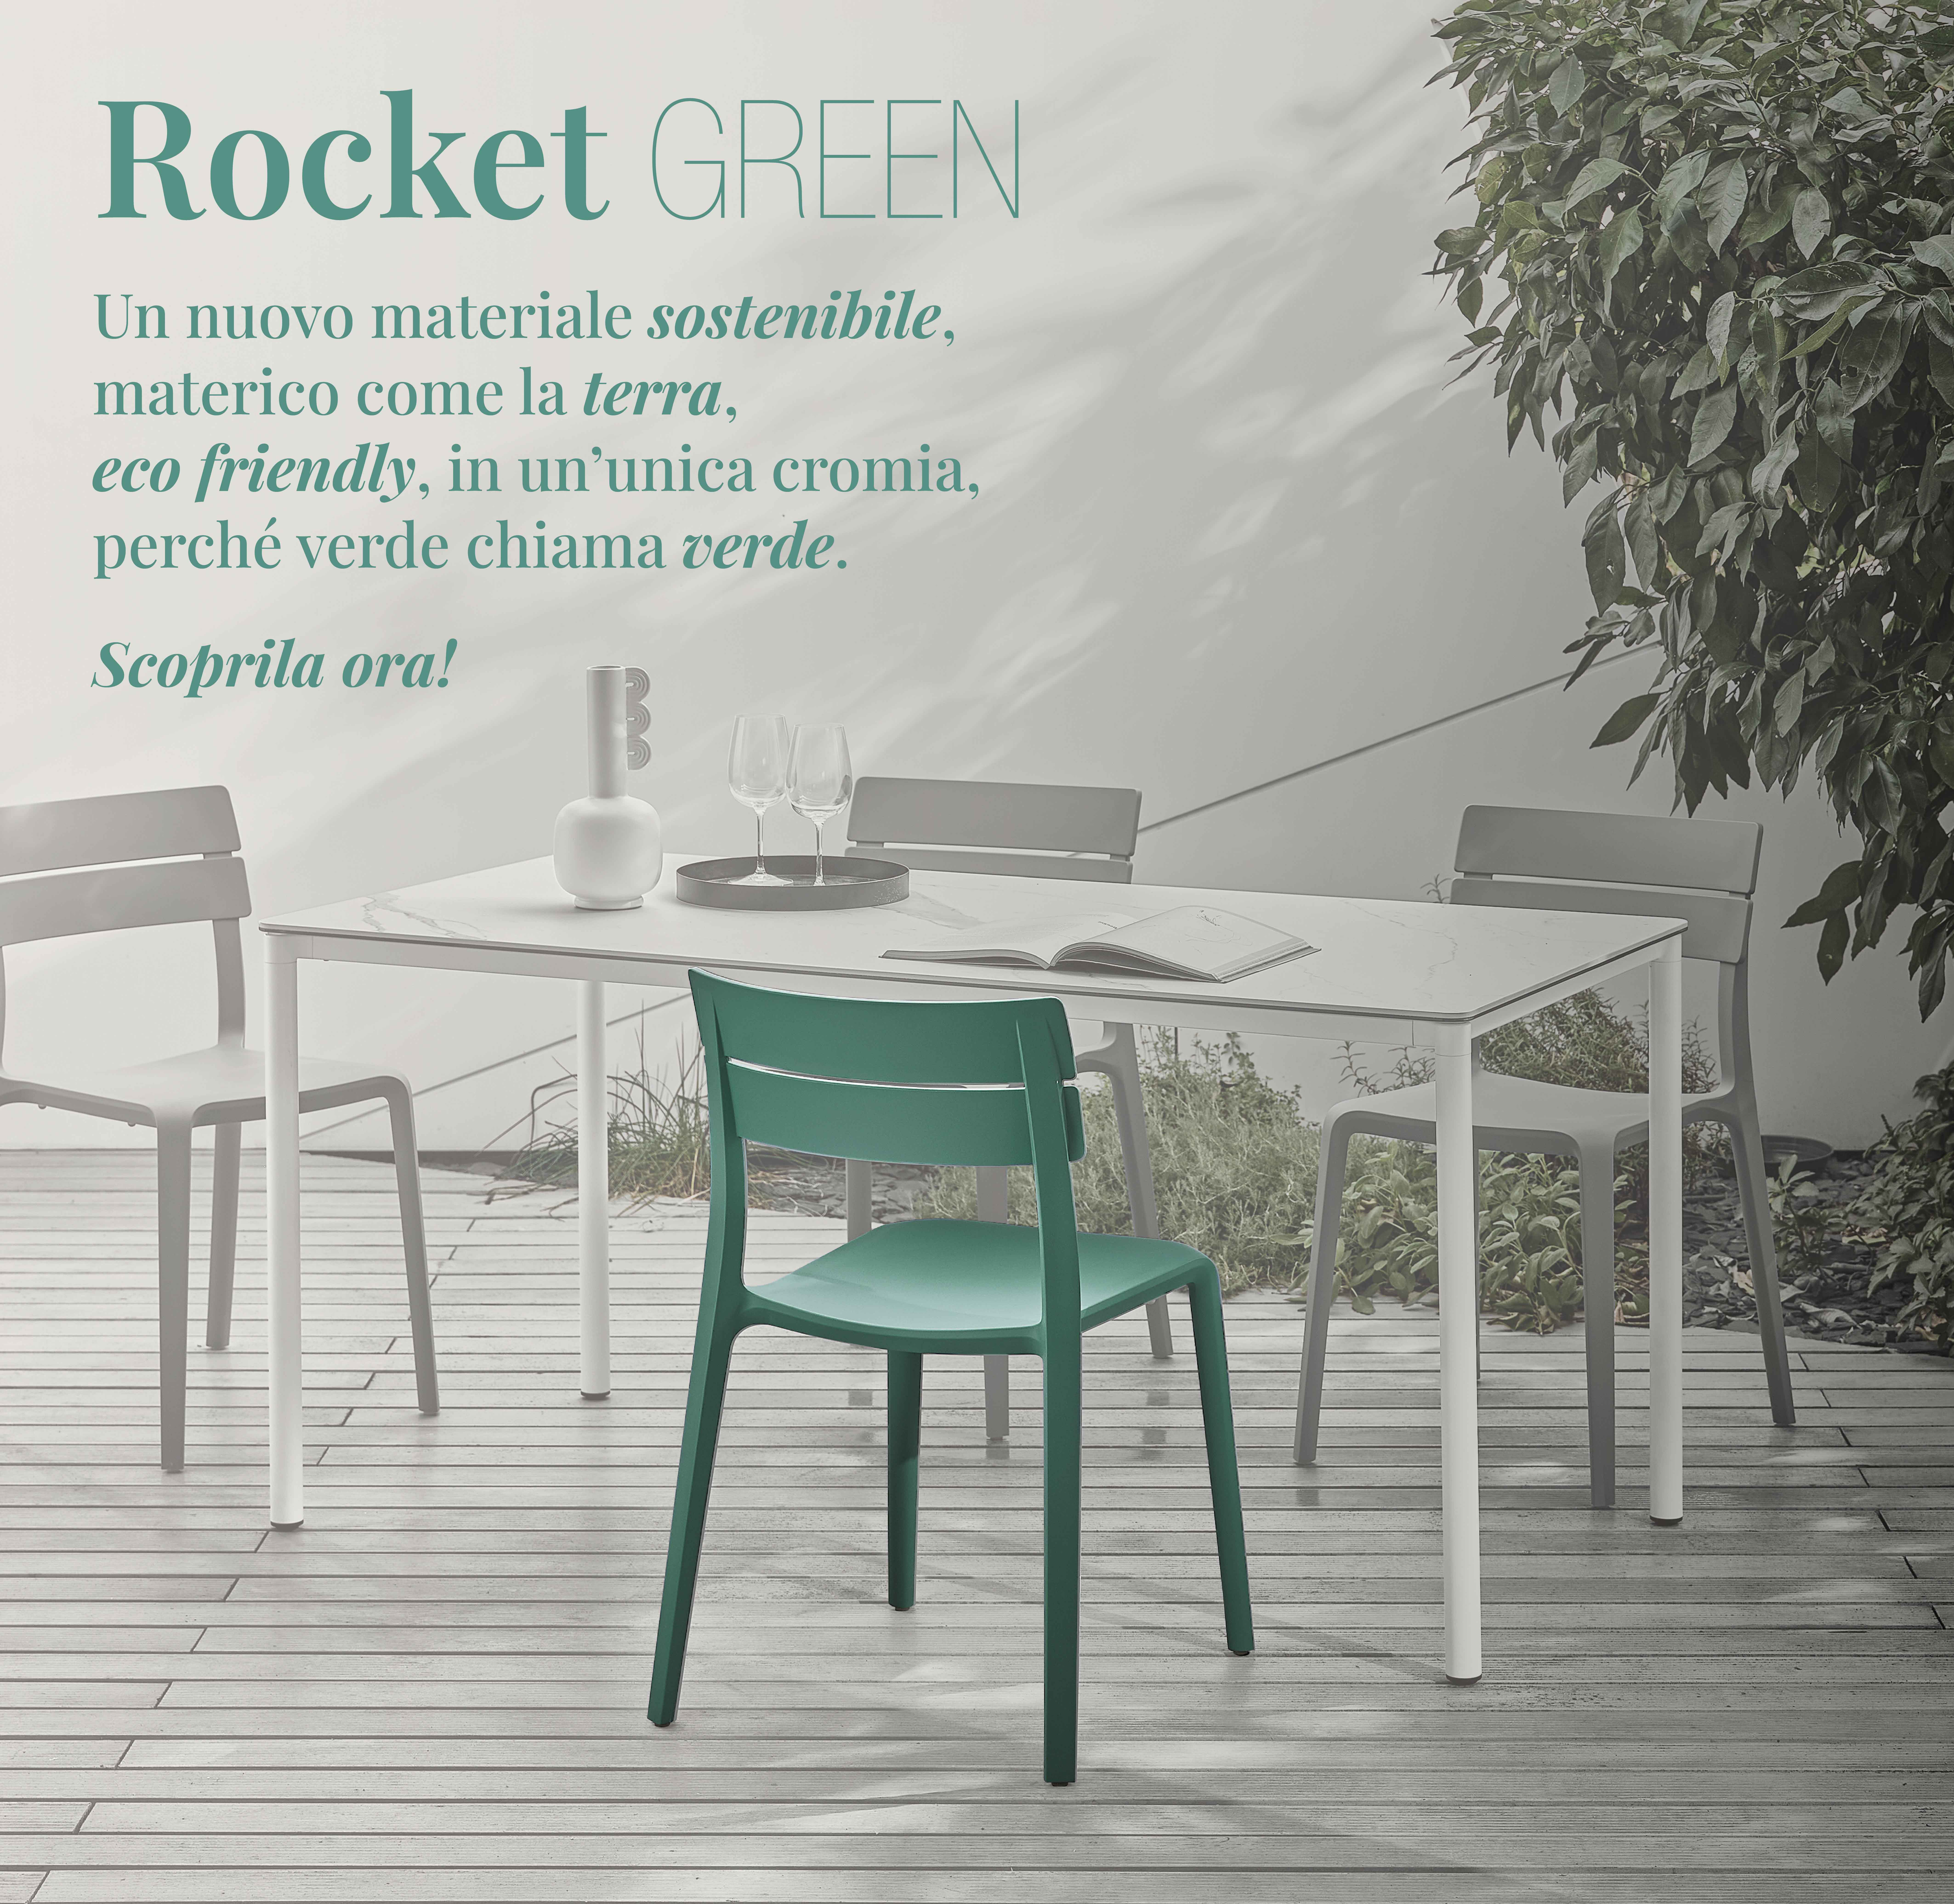 Rocket | La sempreverde